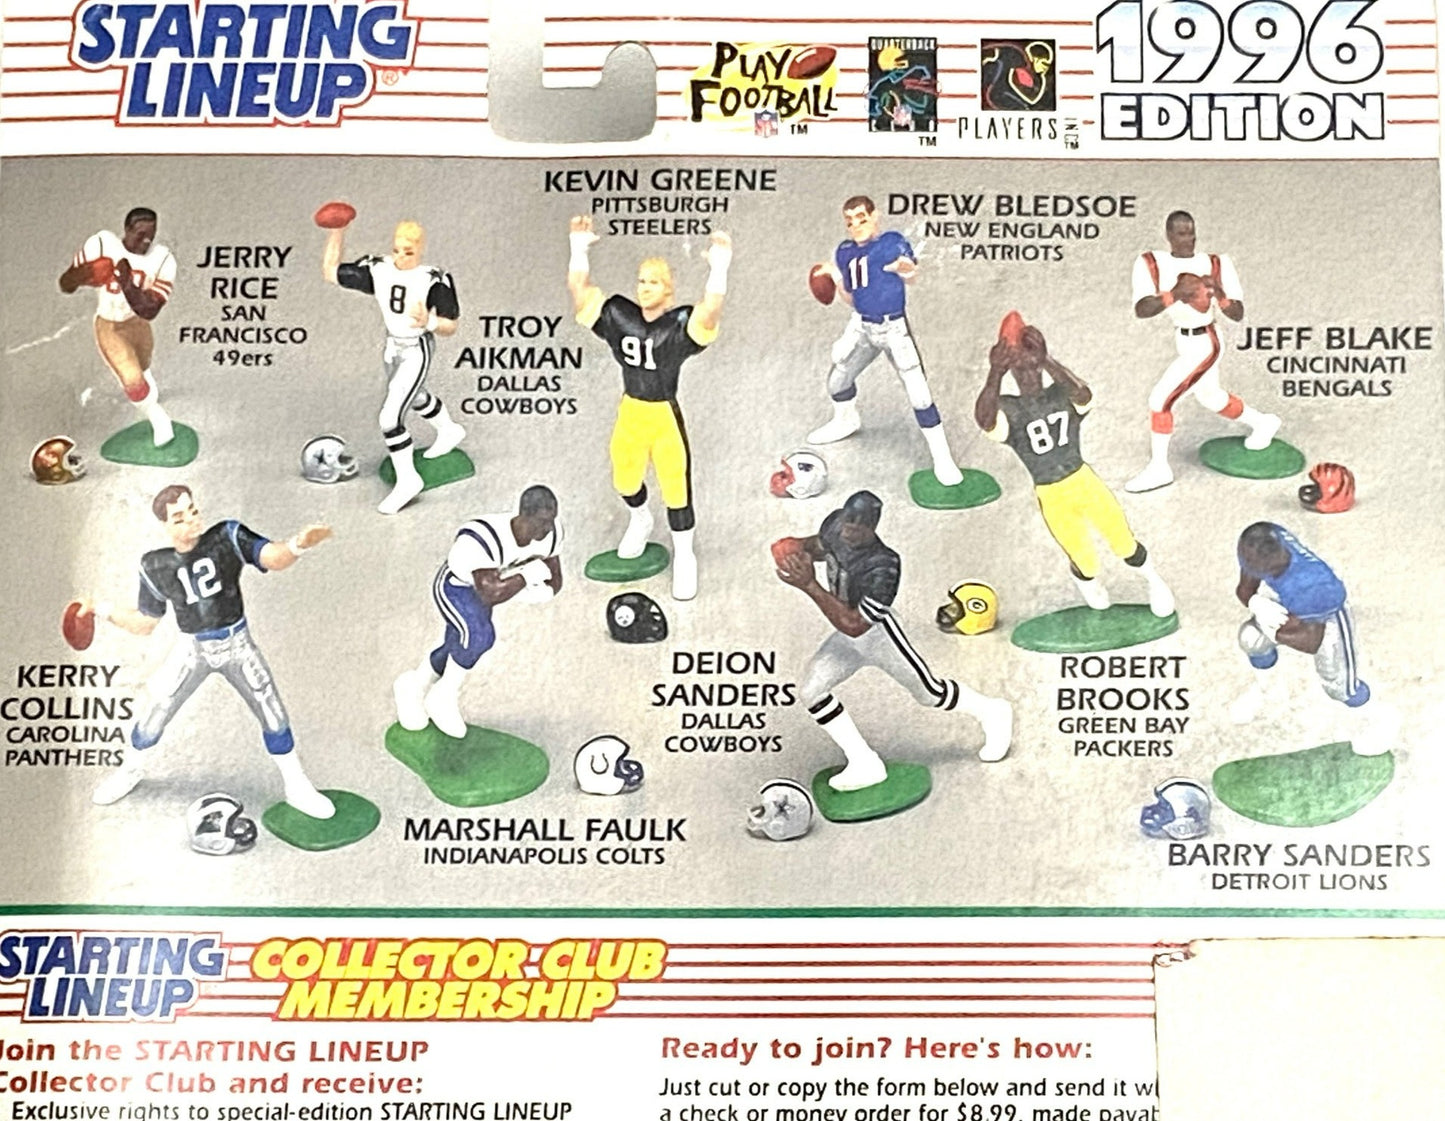 Carl Pickens 1996 Cincinnati Bengals NFL Starting Lineup Figurine by Kenner